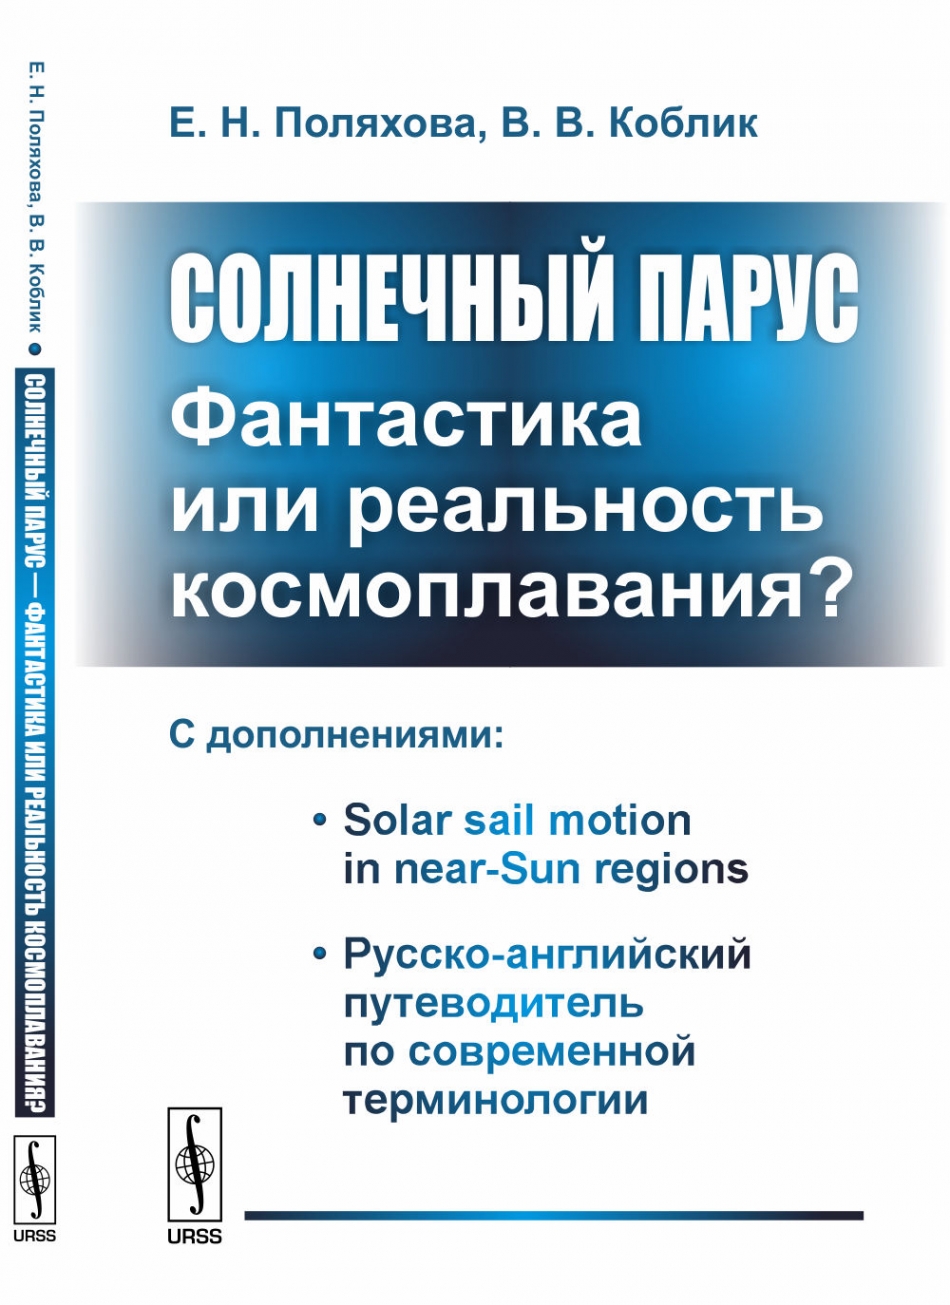  ..,  ..   -    ?  . Solar sail motion in near-Sun regions. -     